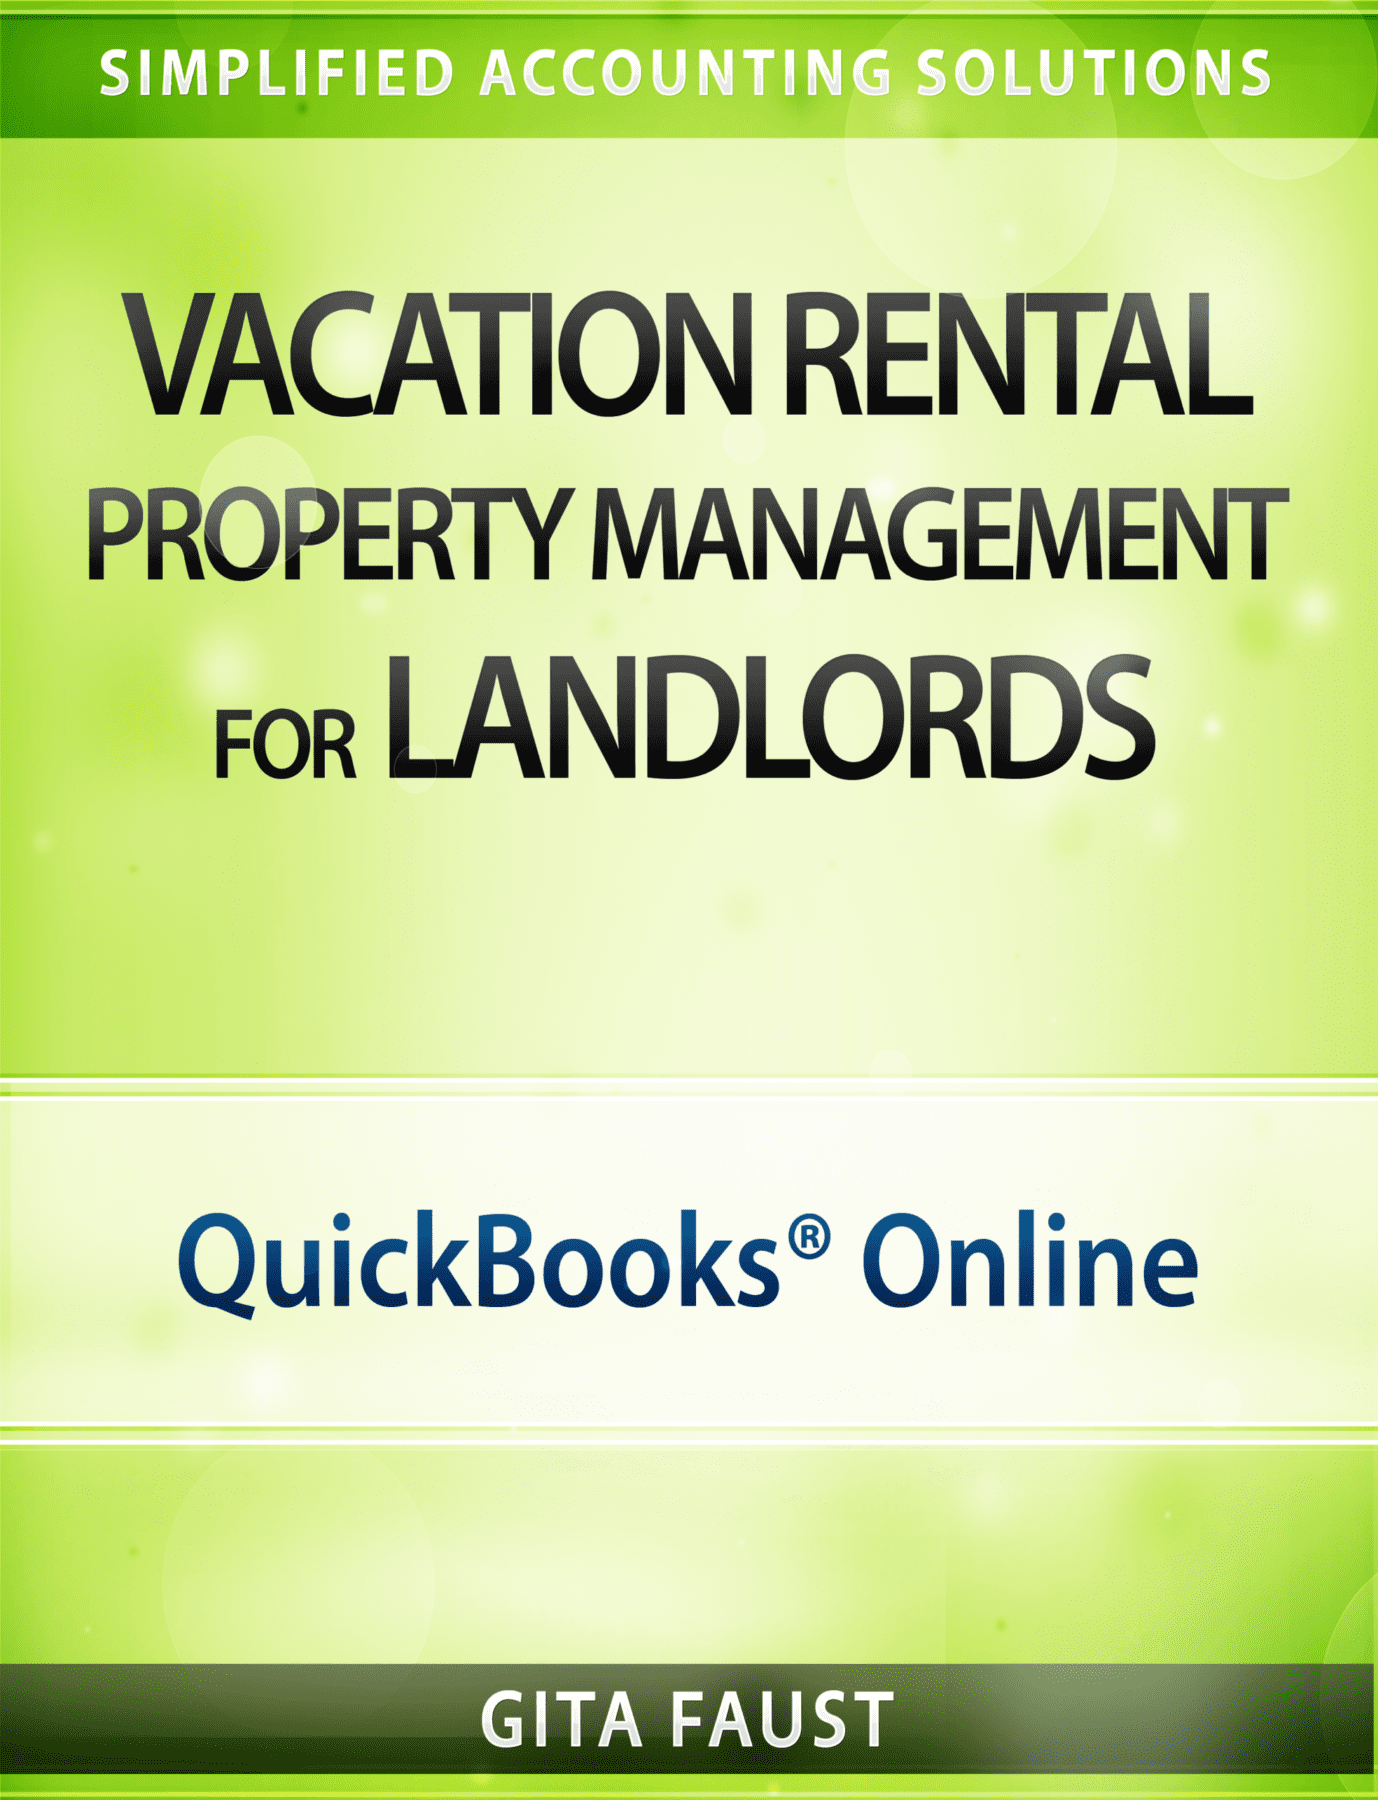 QuickBooks Online for Vacation Rentals